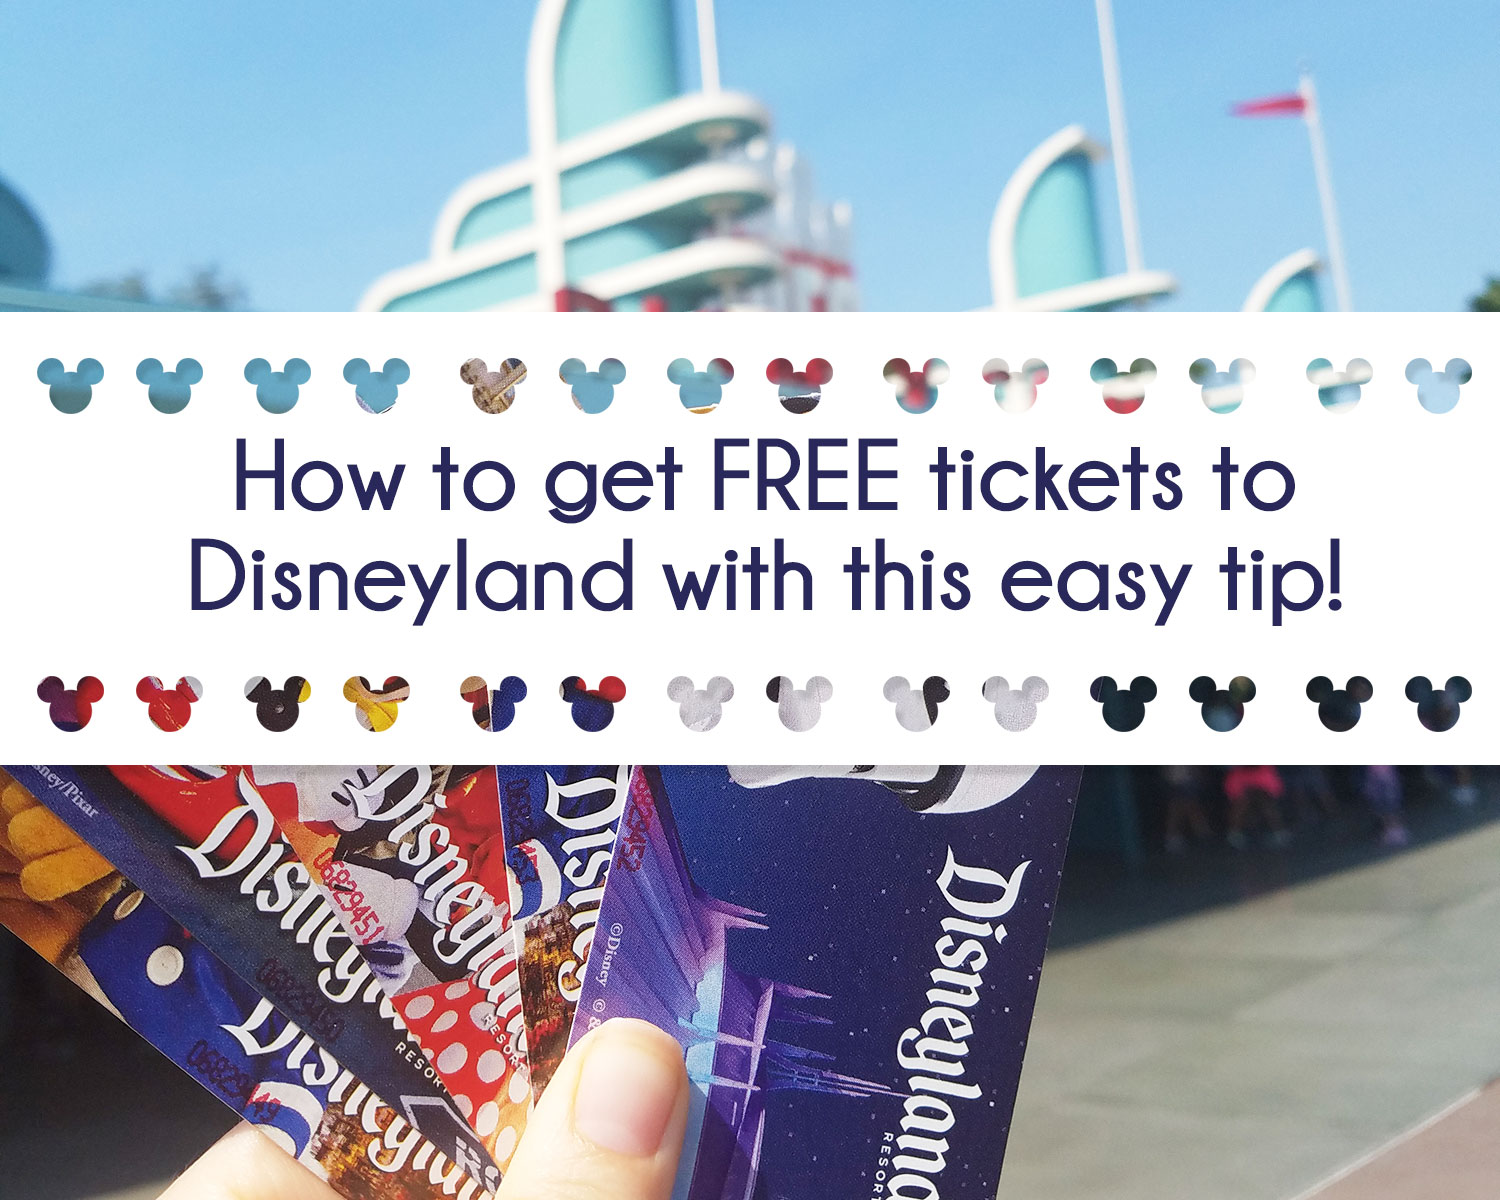 Free Disneyland Tickets. Get FREE Disneyland tickets with this easy tip!